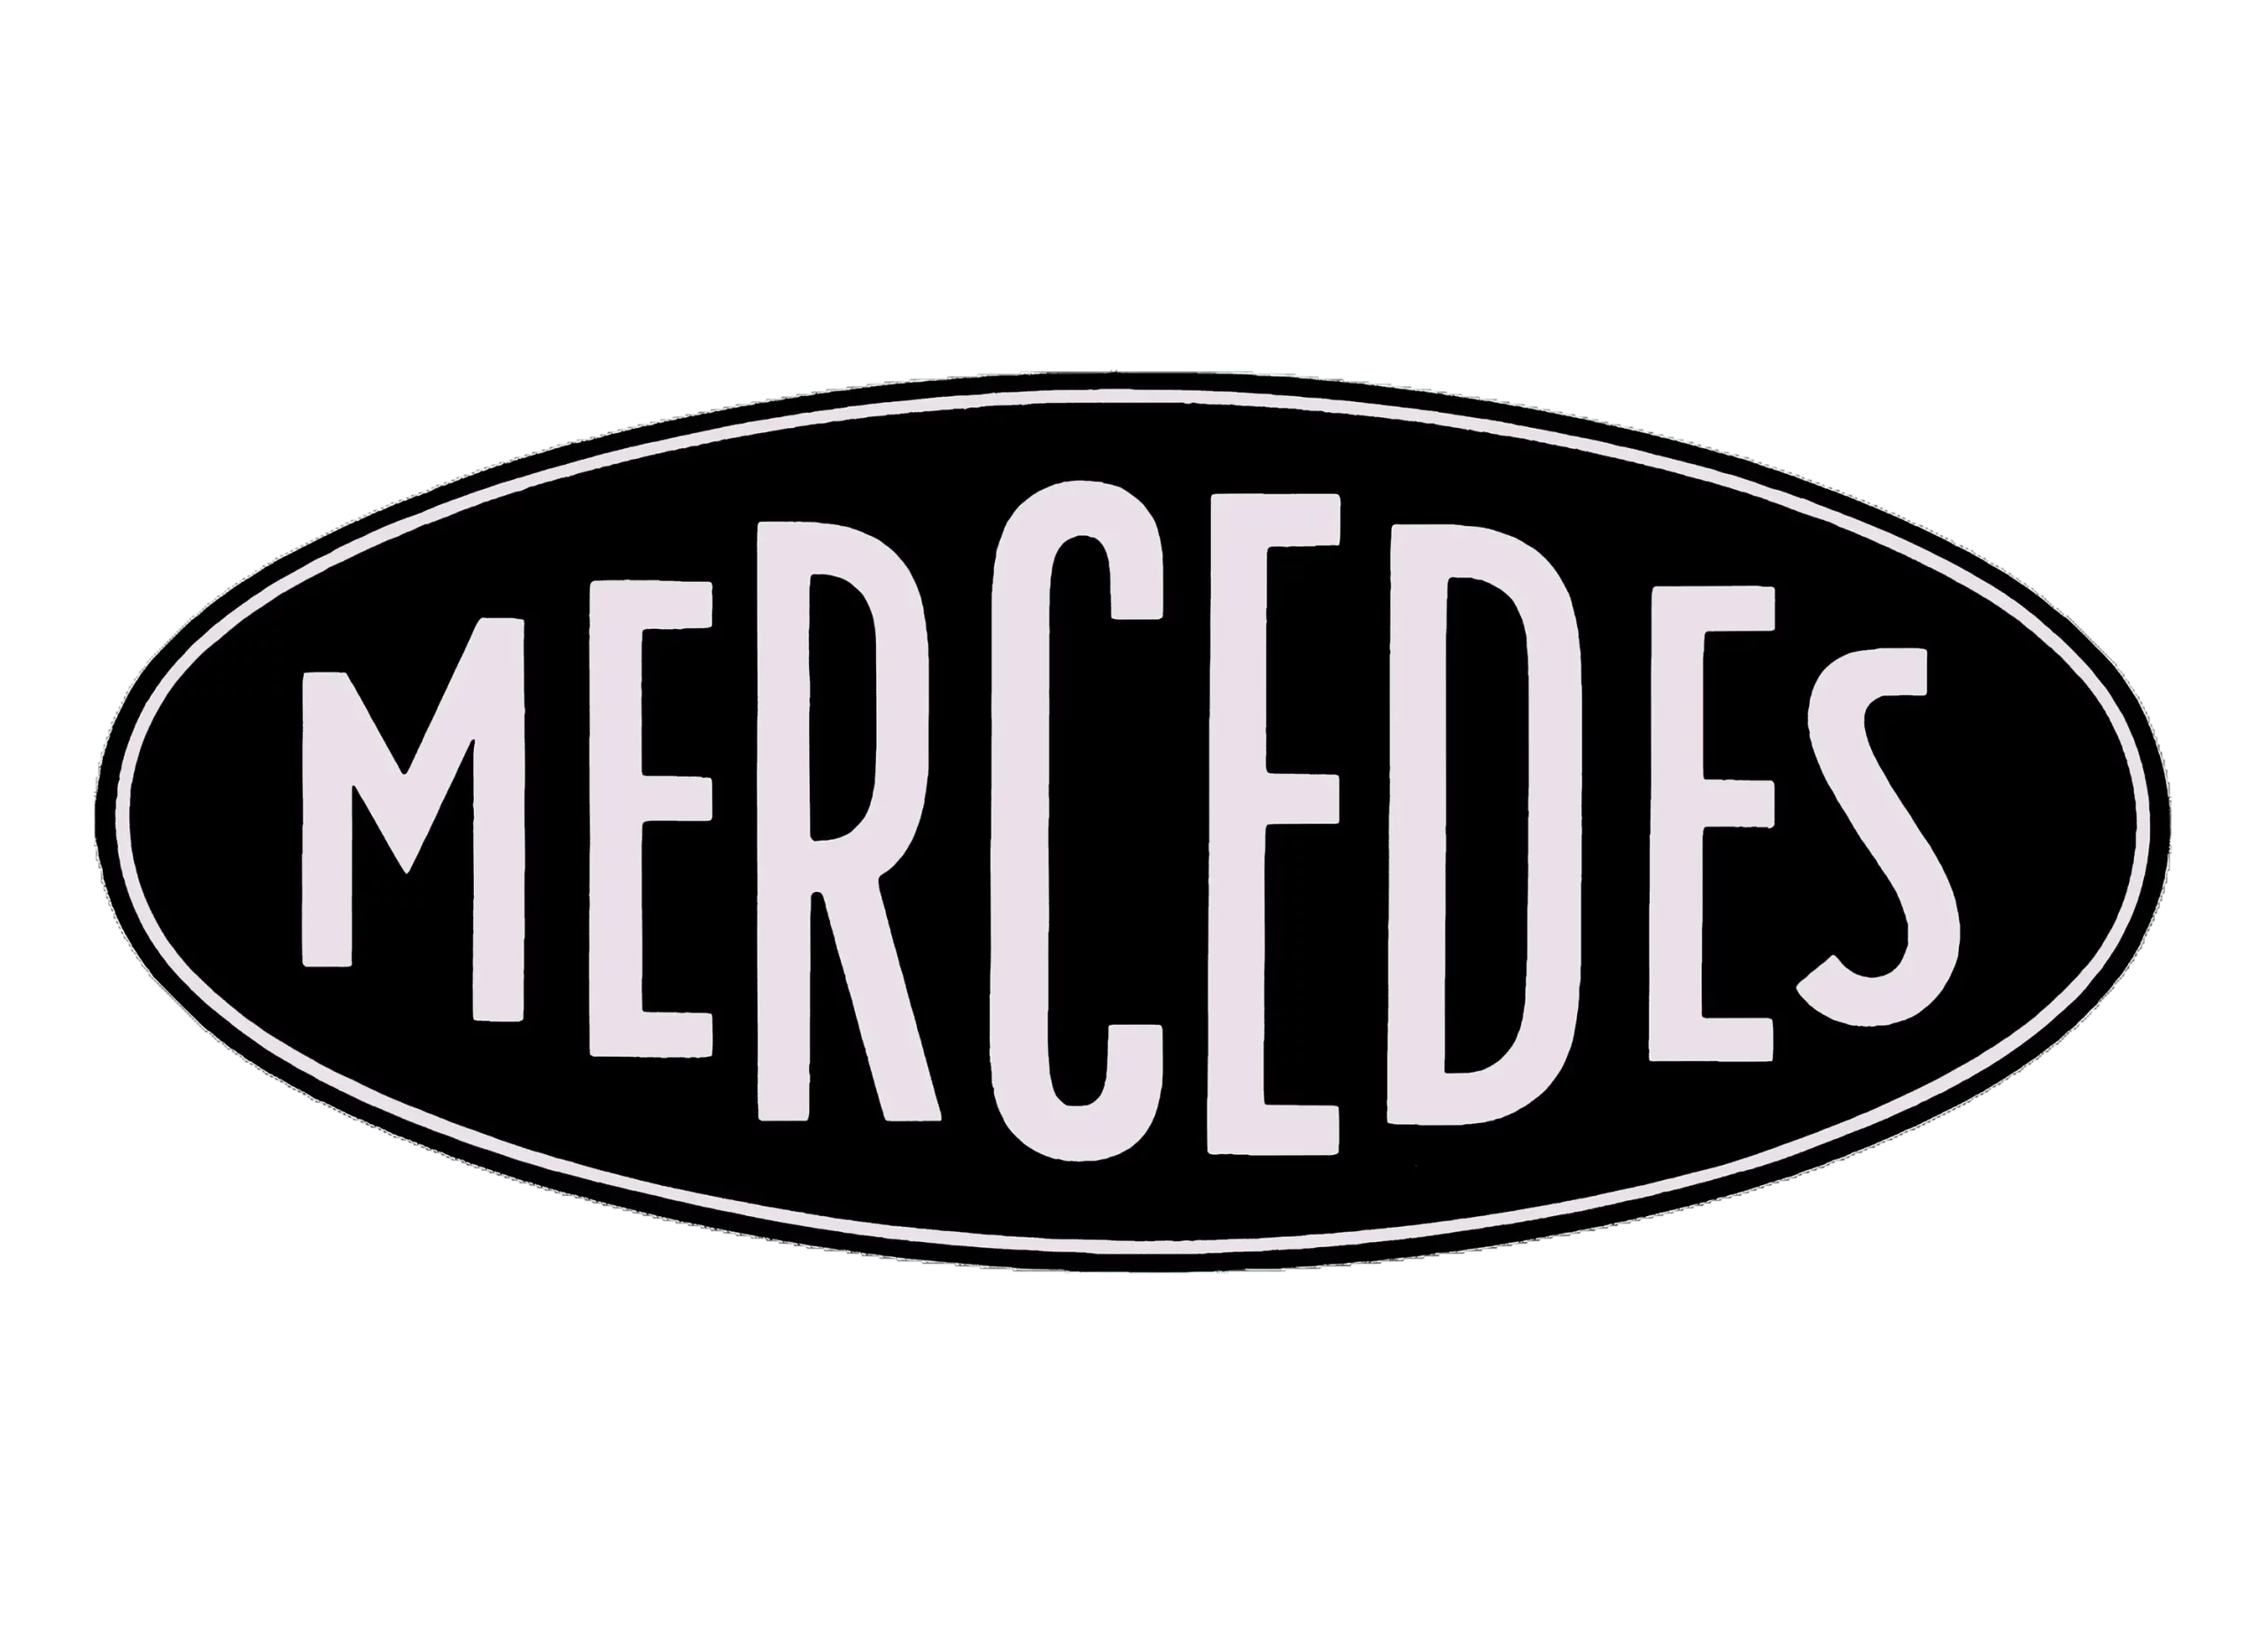 Mercedes logo 1902-1909